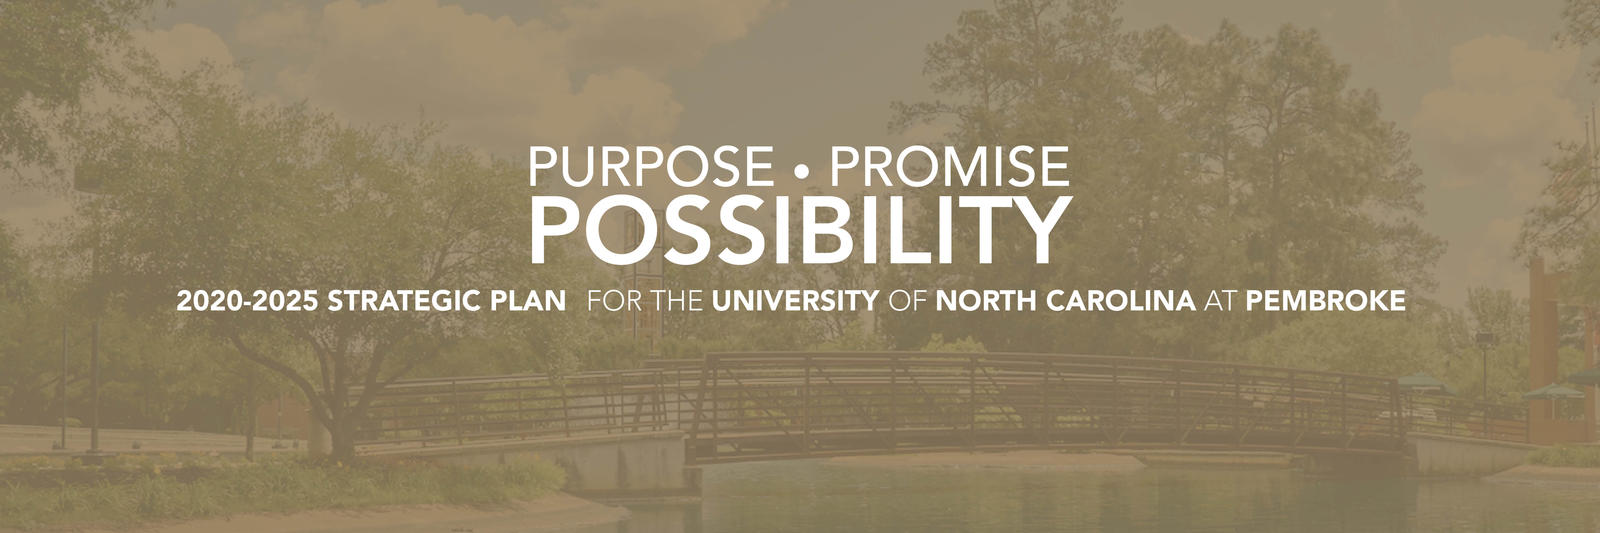 Purpose Promise Possibility, the Strategic Plan for UNC Pembroke